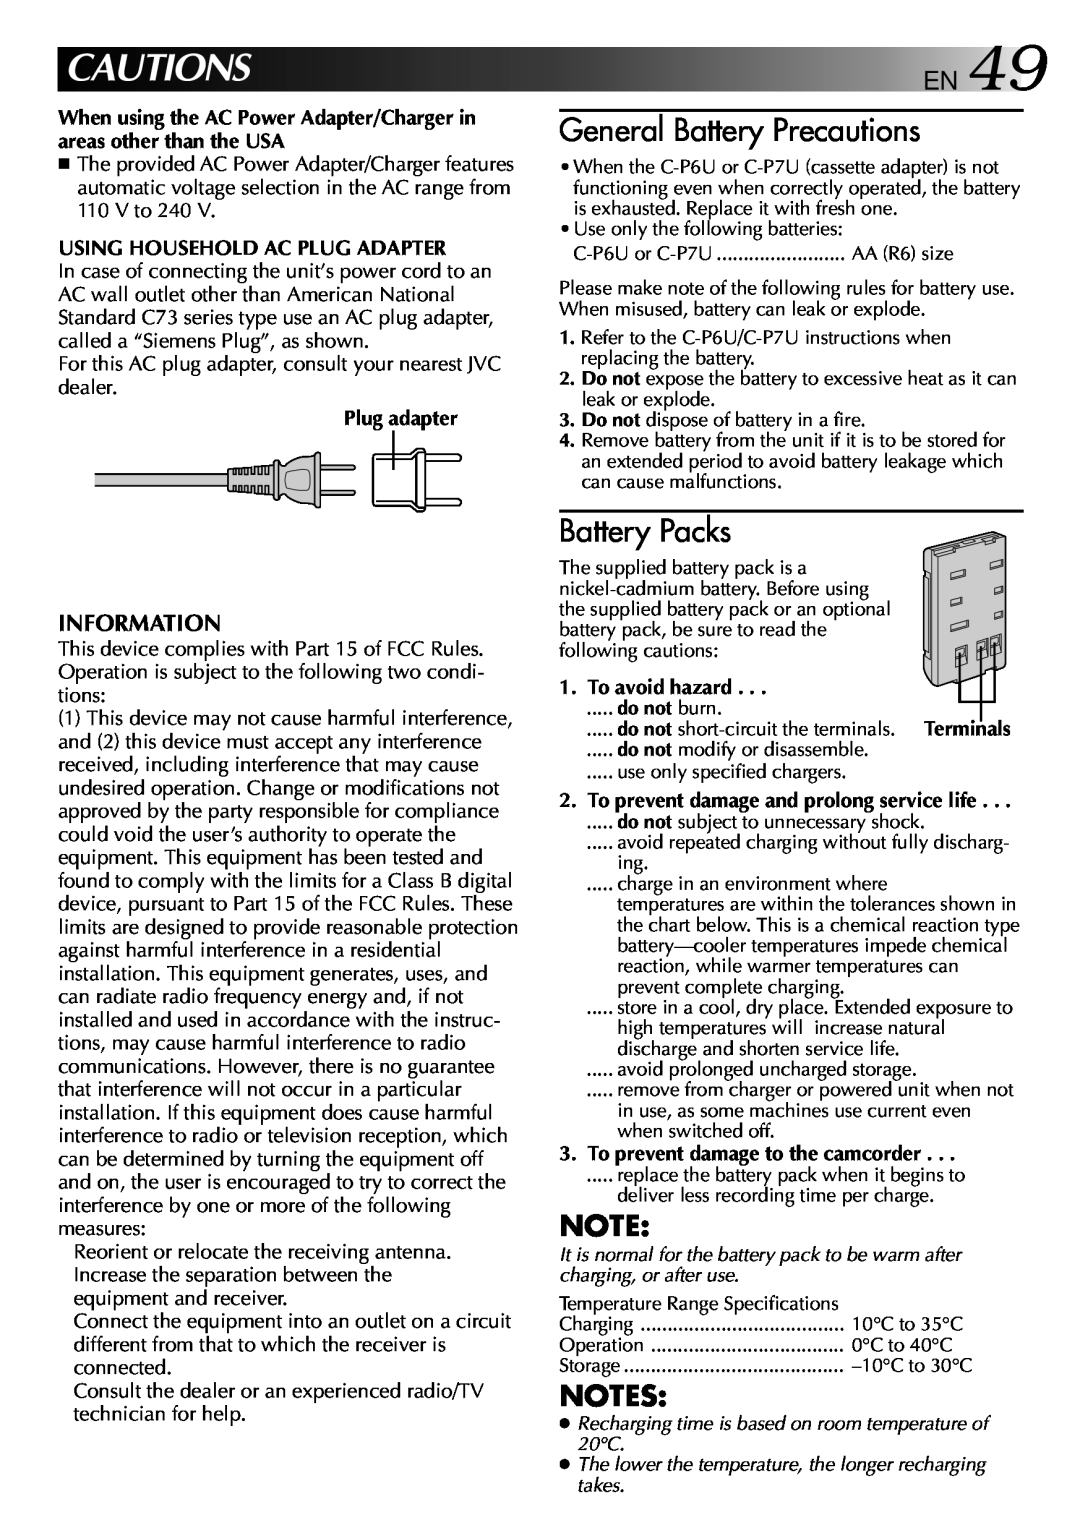 JVC GR-AXM70 manual Cautionsen, General Battery Precautions, Battery Packs, Information 